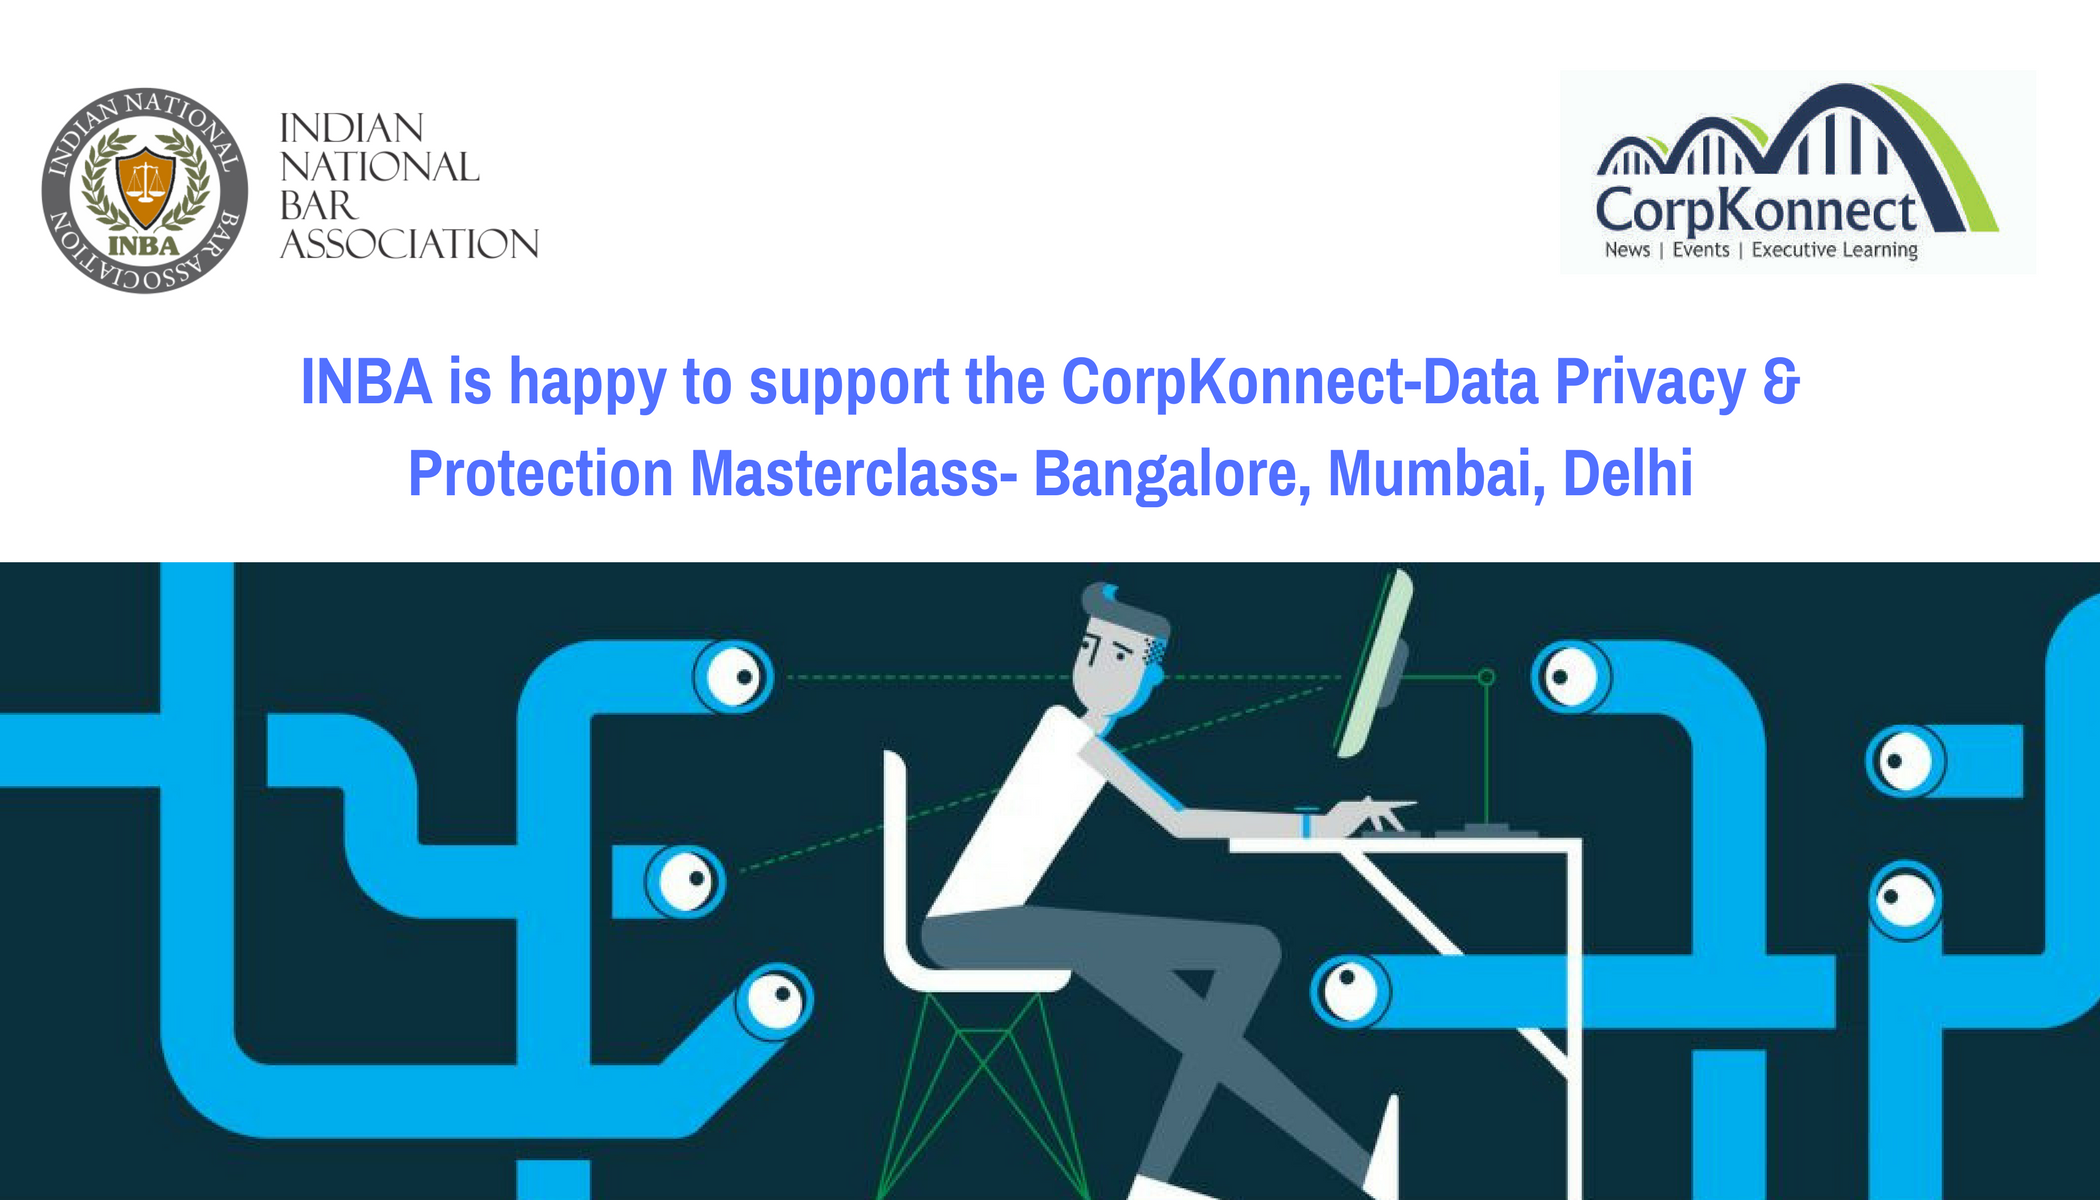 INBA is happy to support the CorpKonnect-Data Privacy & Protection Masterclass- Bangalore, Mumbai, Delhi